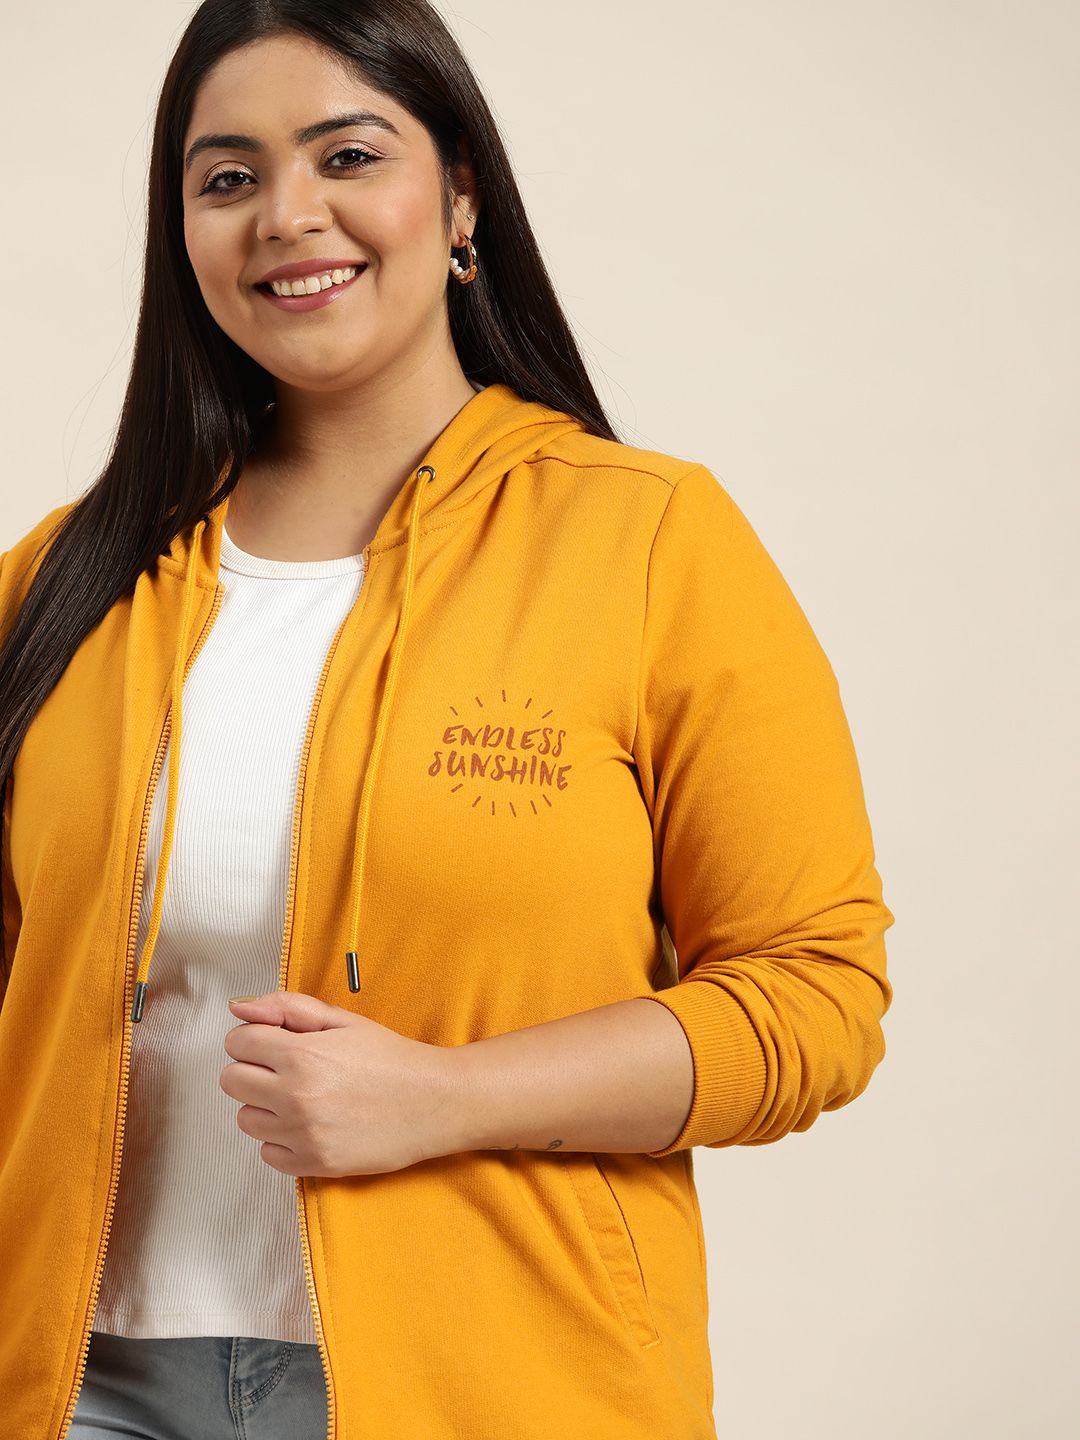 Sztori Women Plus Size Mustard Yellow Hooded Sweatshirt with Printed Back Price in India